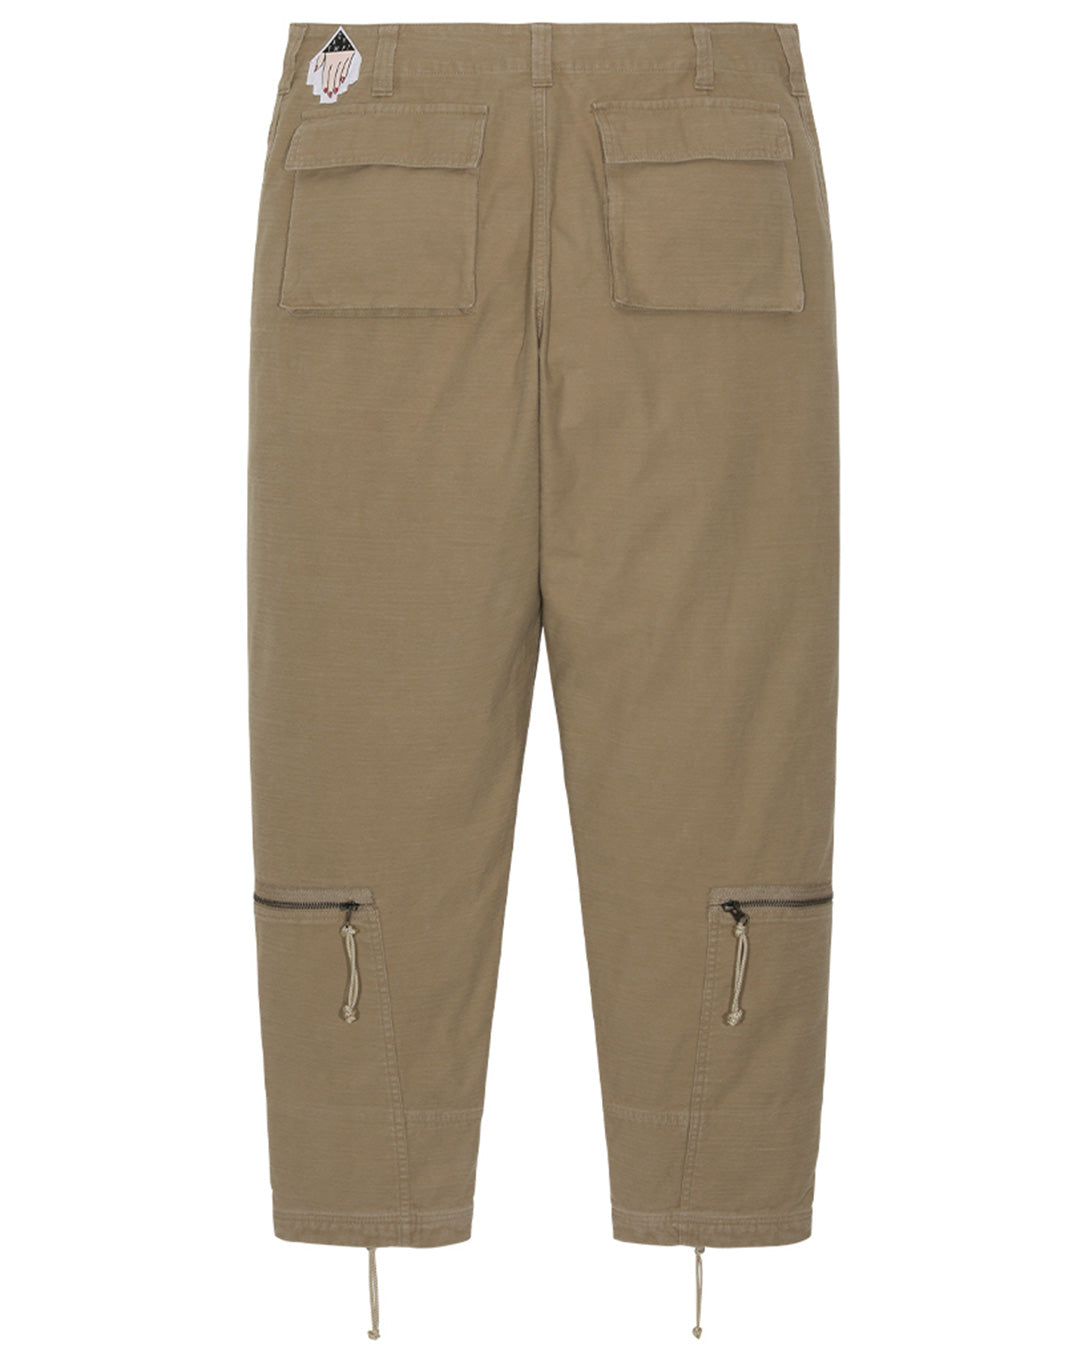 Yossarian Pants #7